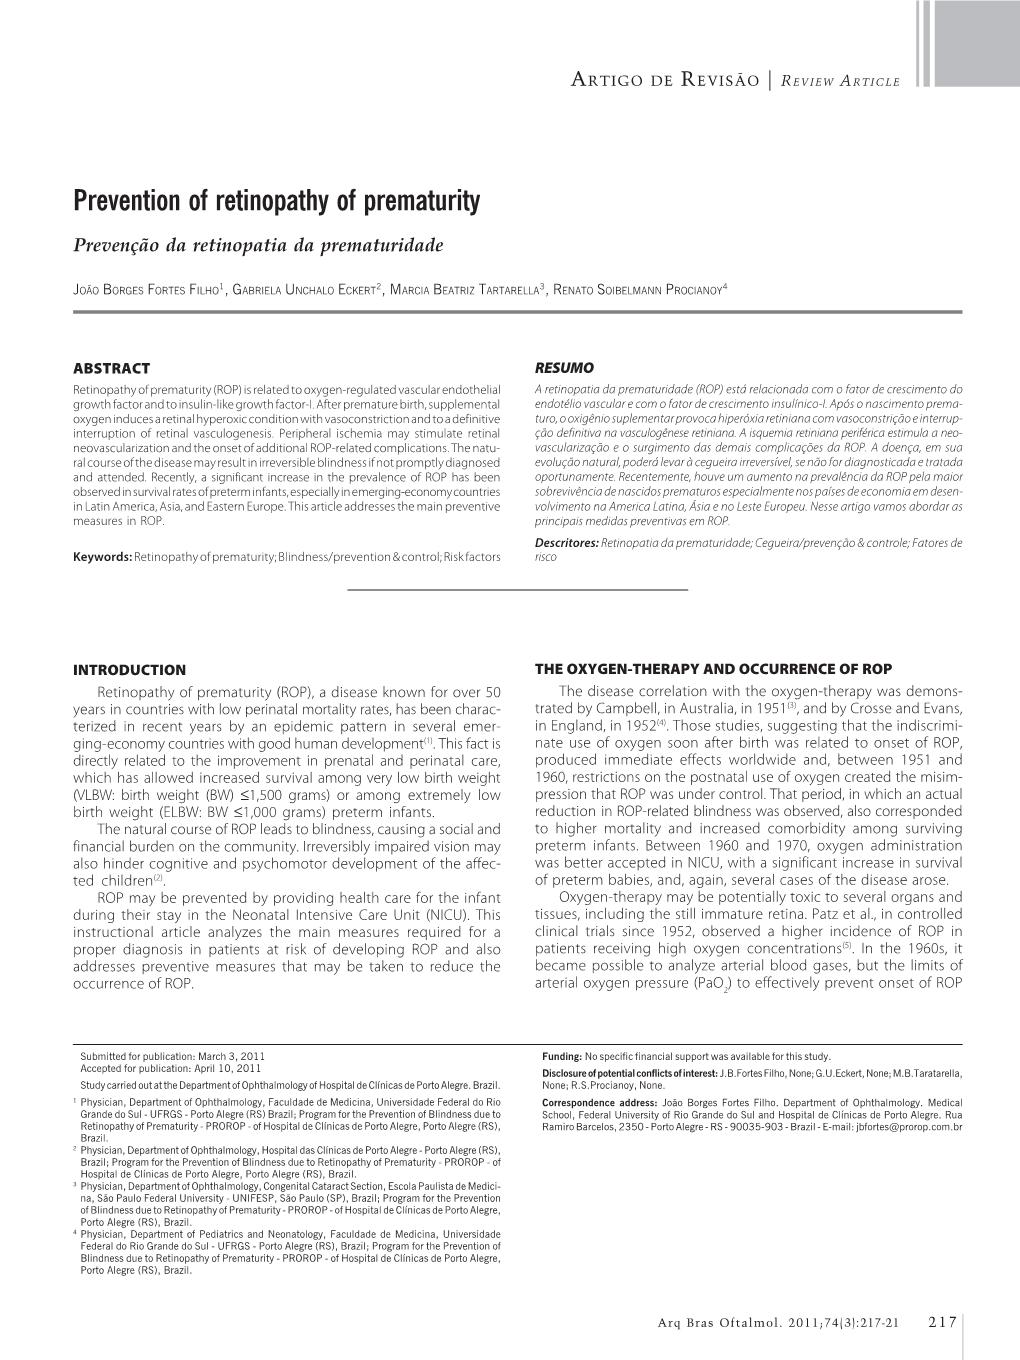 Prevention of Retinopathy of Prematurity